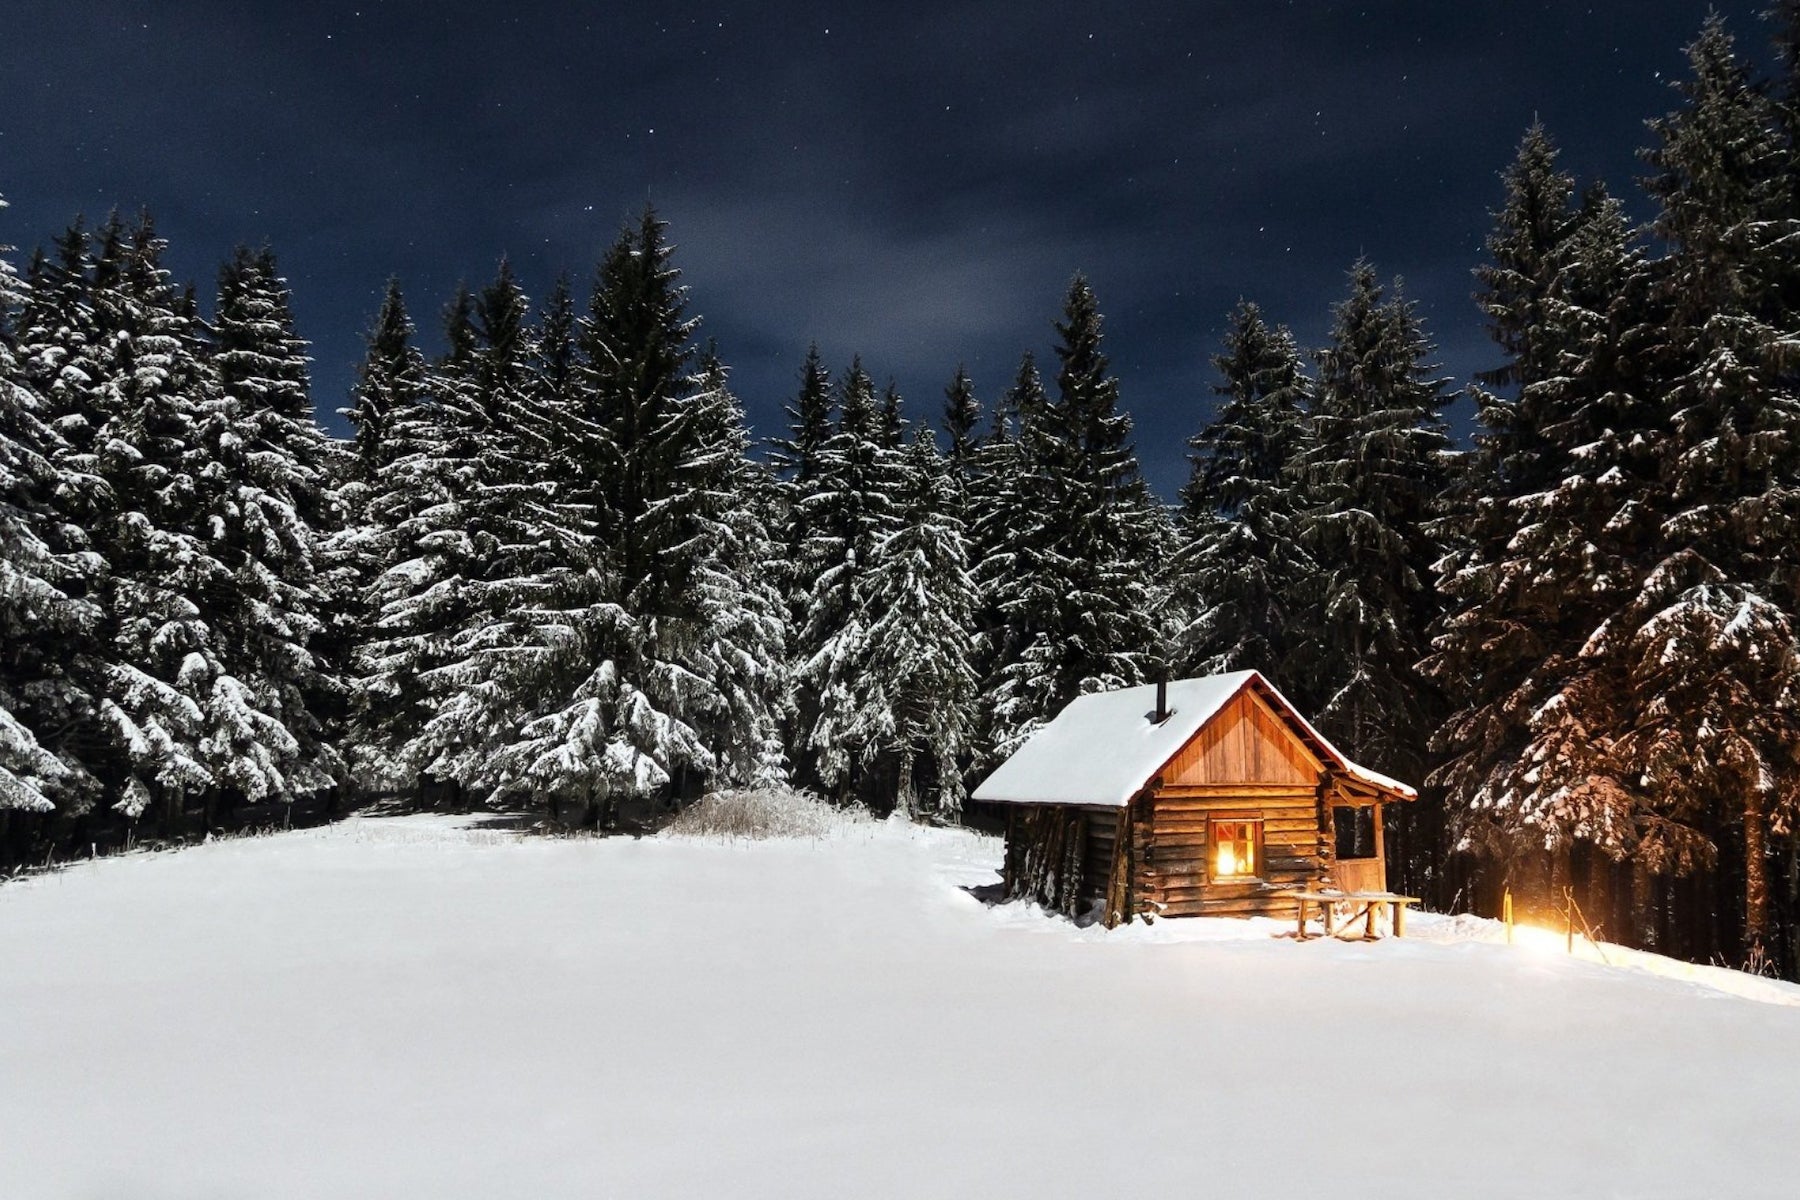 cozy cabin evergreen forest winter dark sky